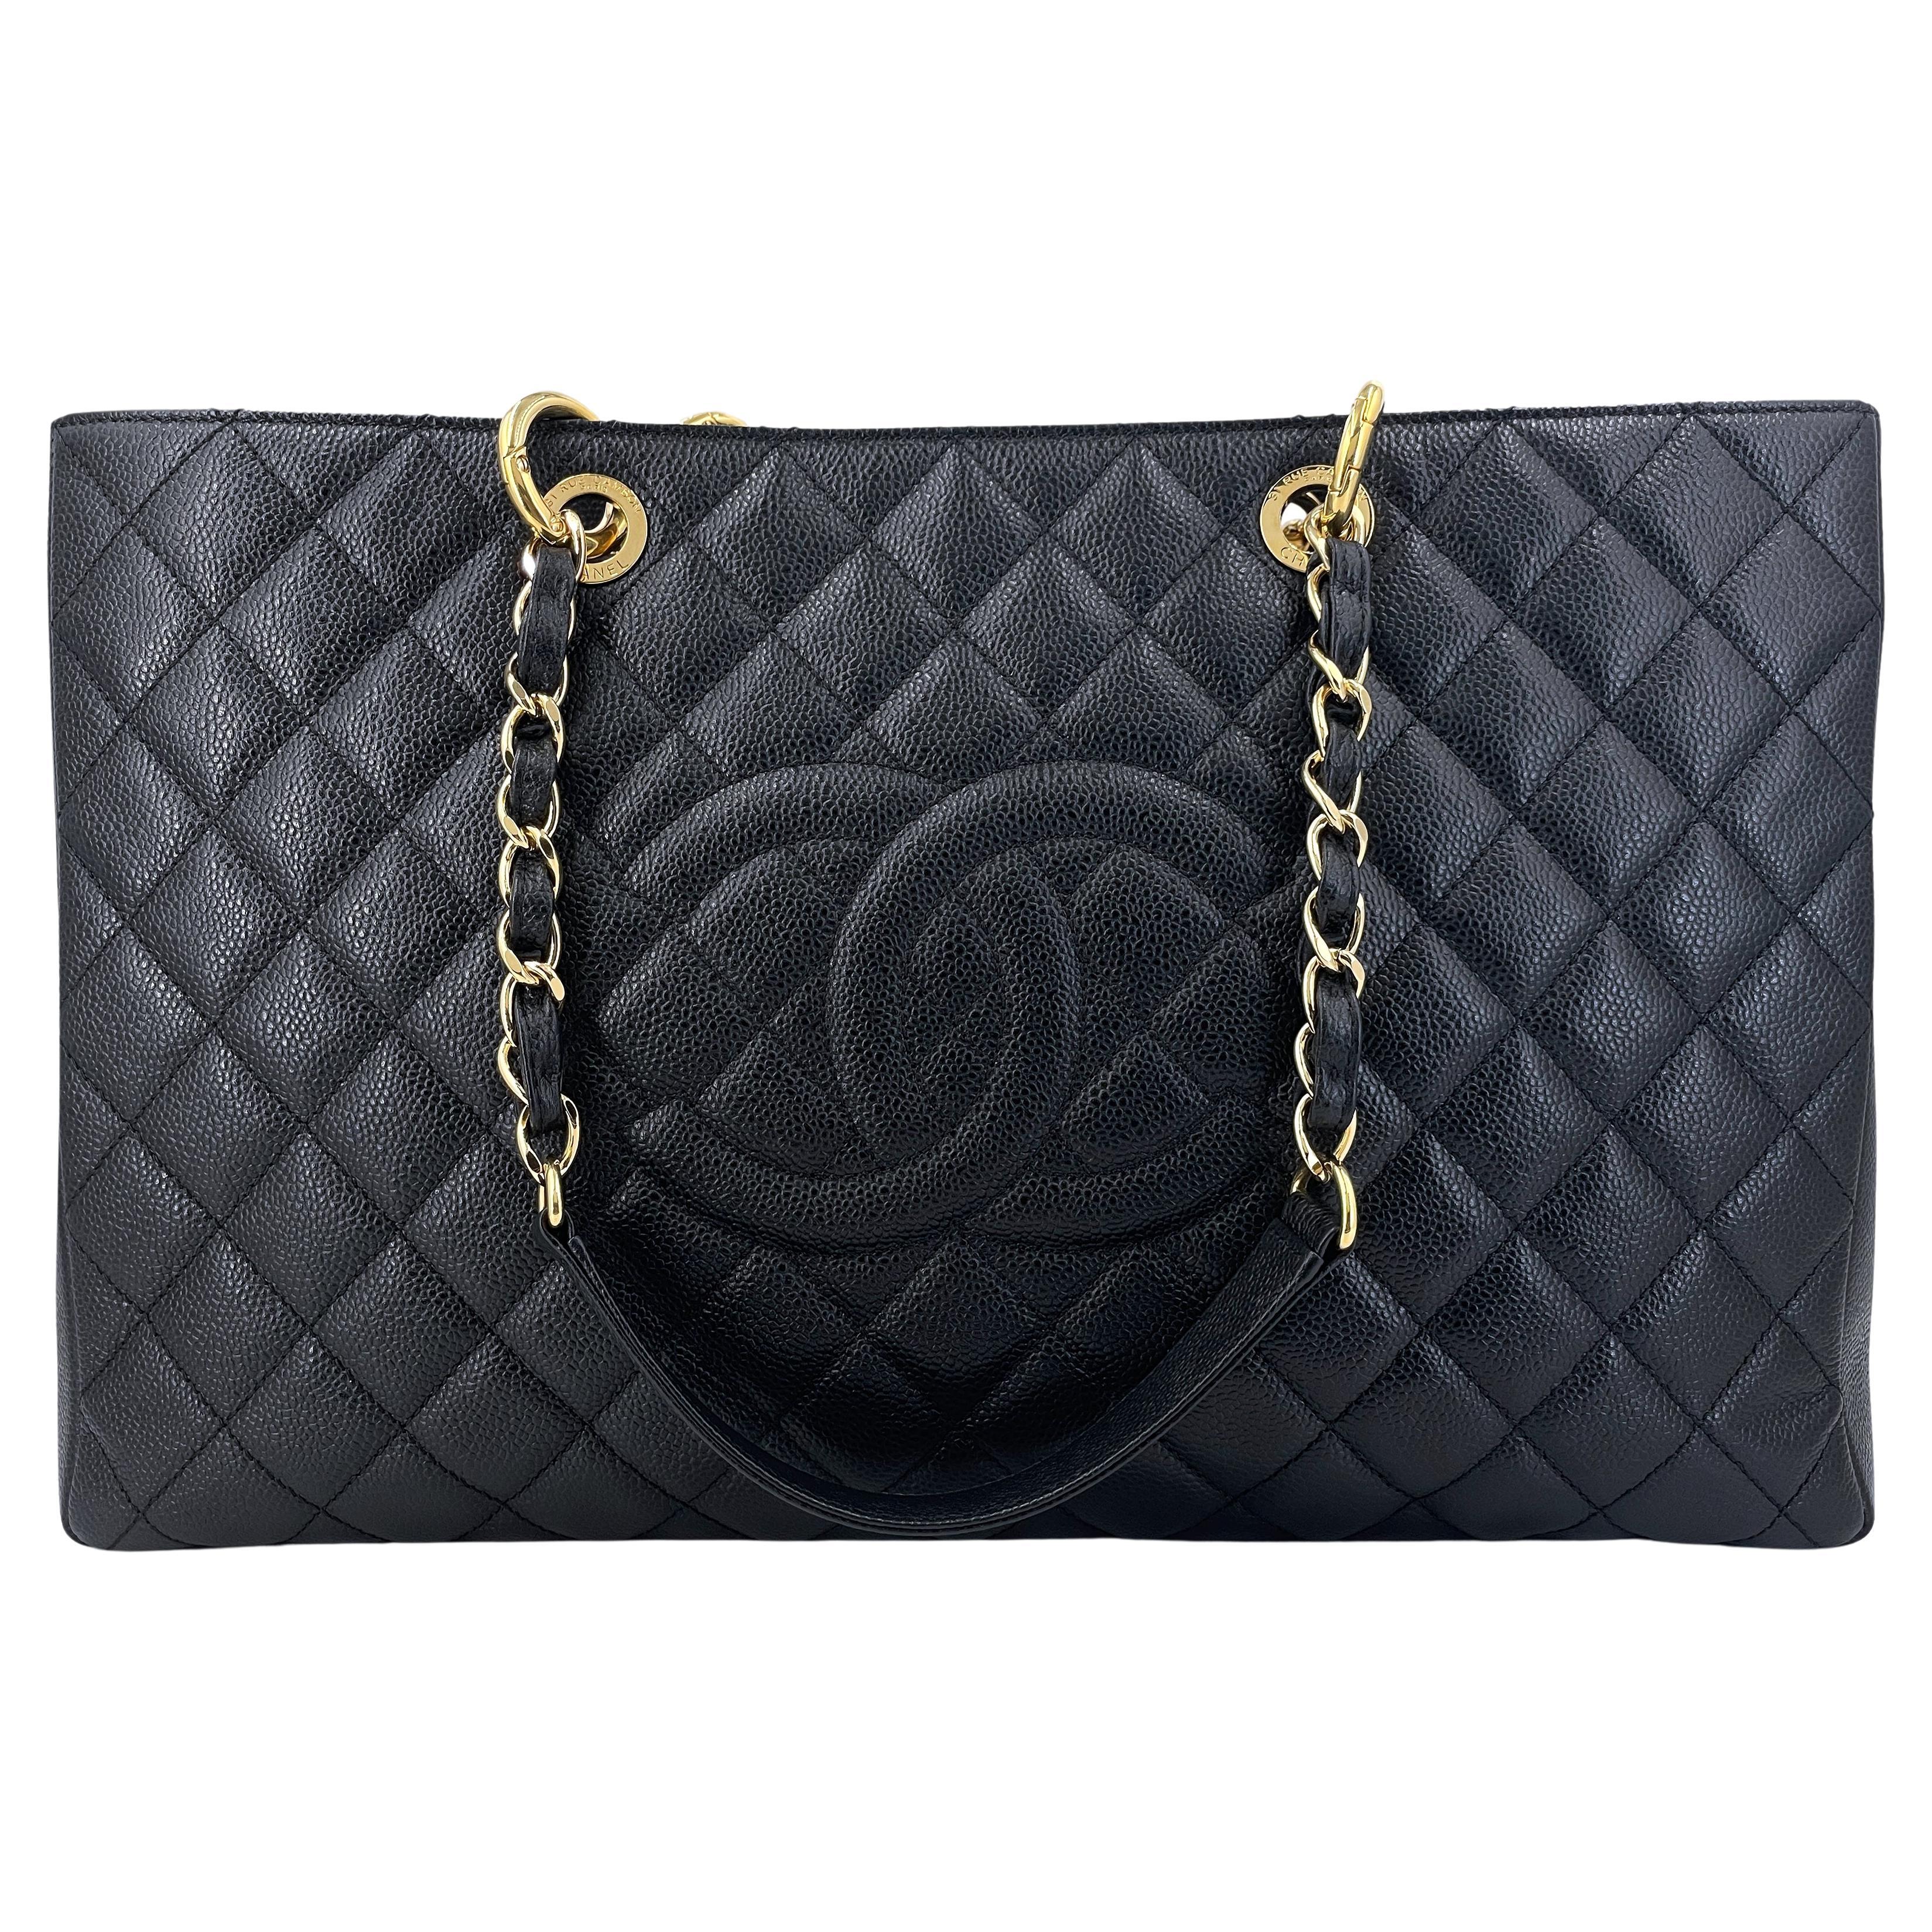 Chanel Black Caviar XL GST Grand Shopper Tote Bag GHW 67159 For Sale